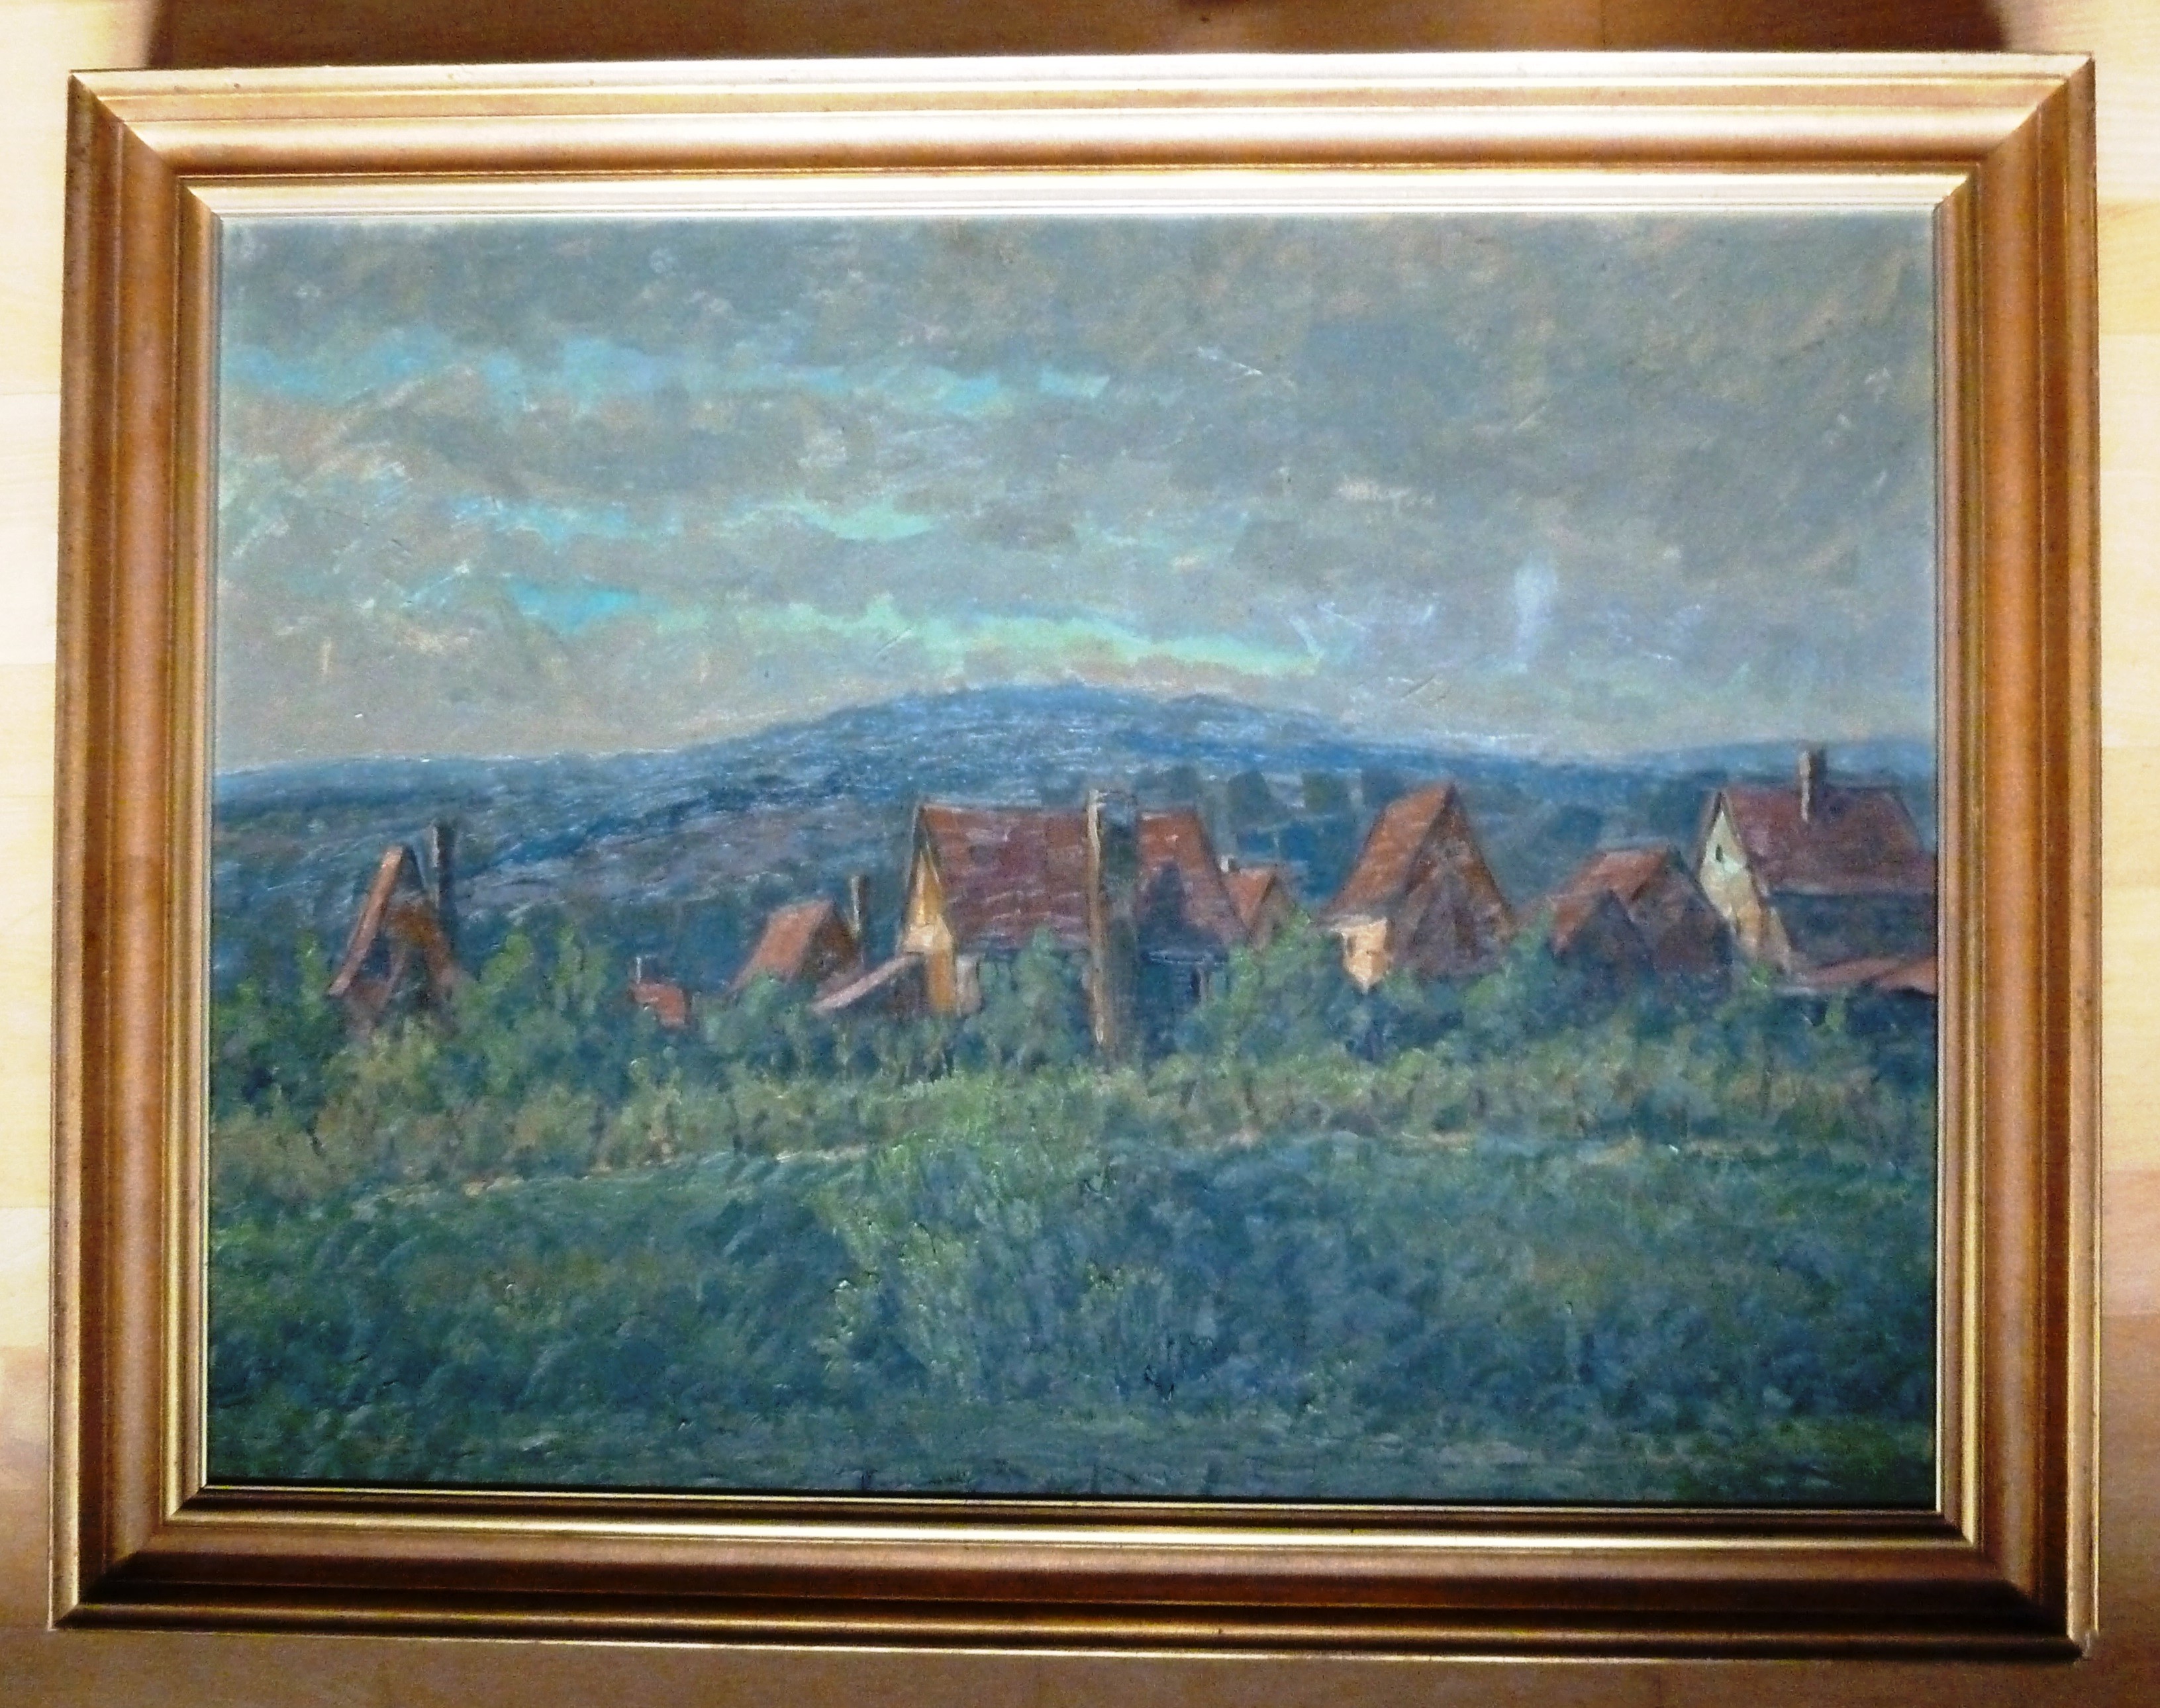 Malerei; Farb-Bild: Dorf in den Weinbergen; Öl auf Hartfaser; Carl Korbmann, 1950 (Stadtmuseum Bad Dürkheim, Museumsgesellschaft Bad Dürkheim e.V. CC BY-NC-SA)